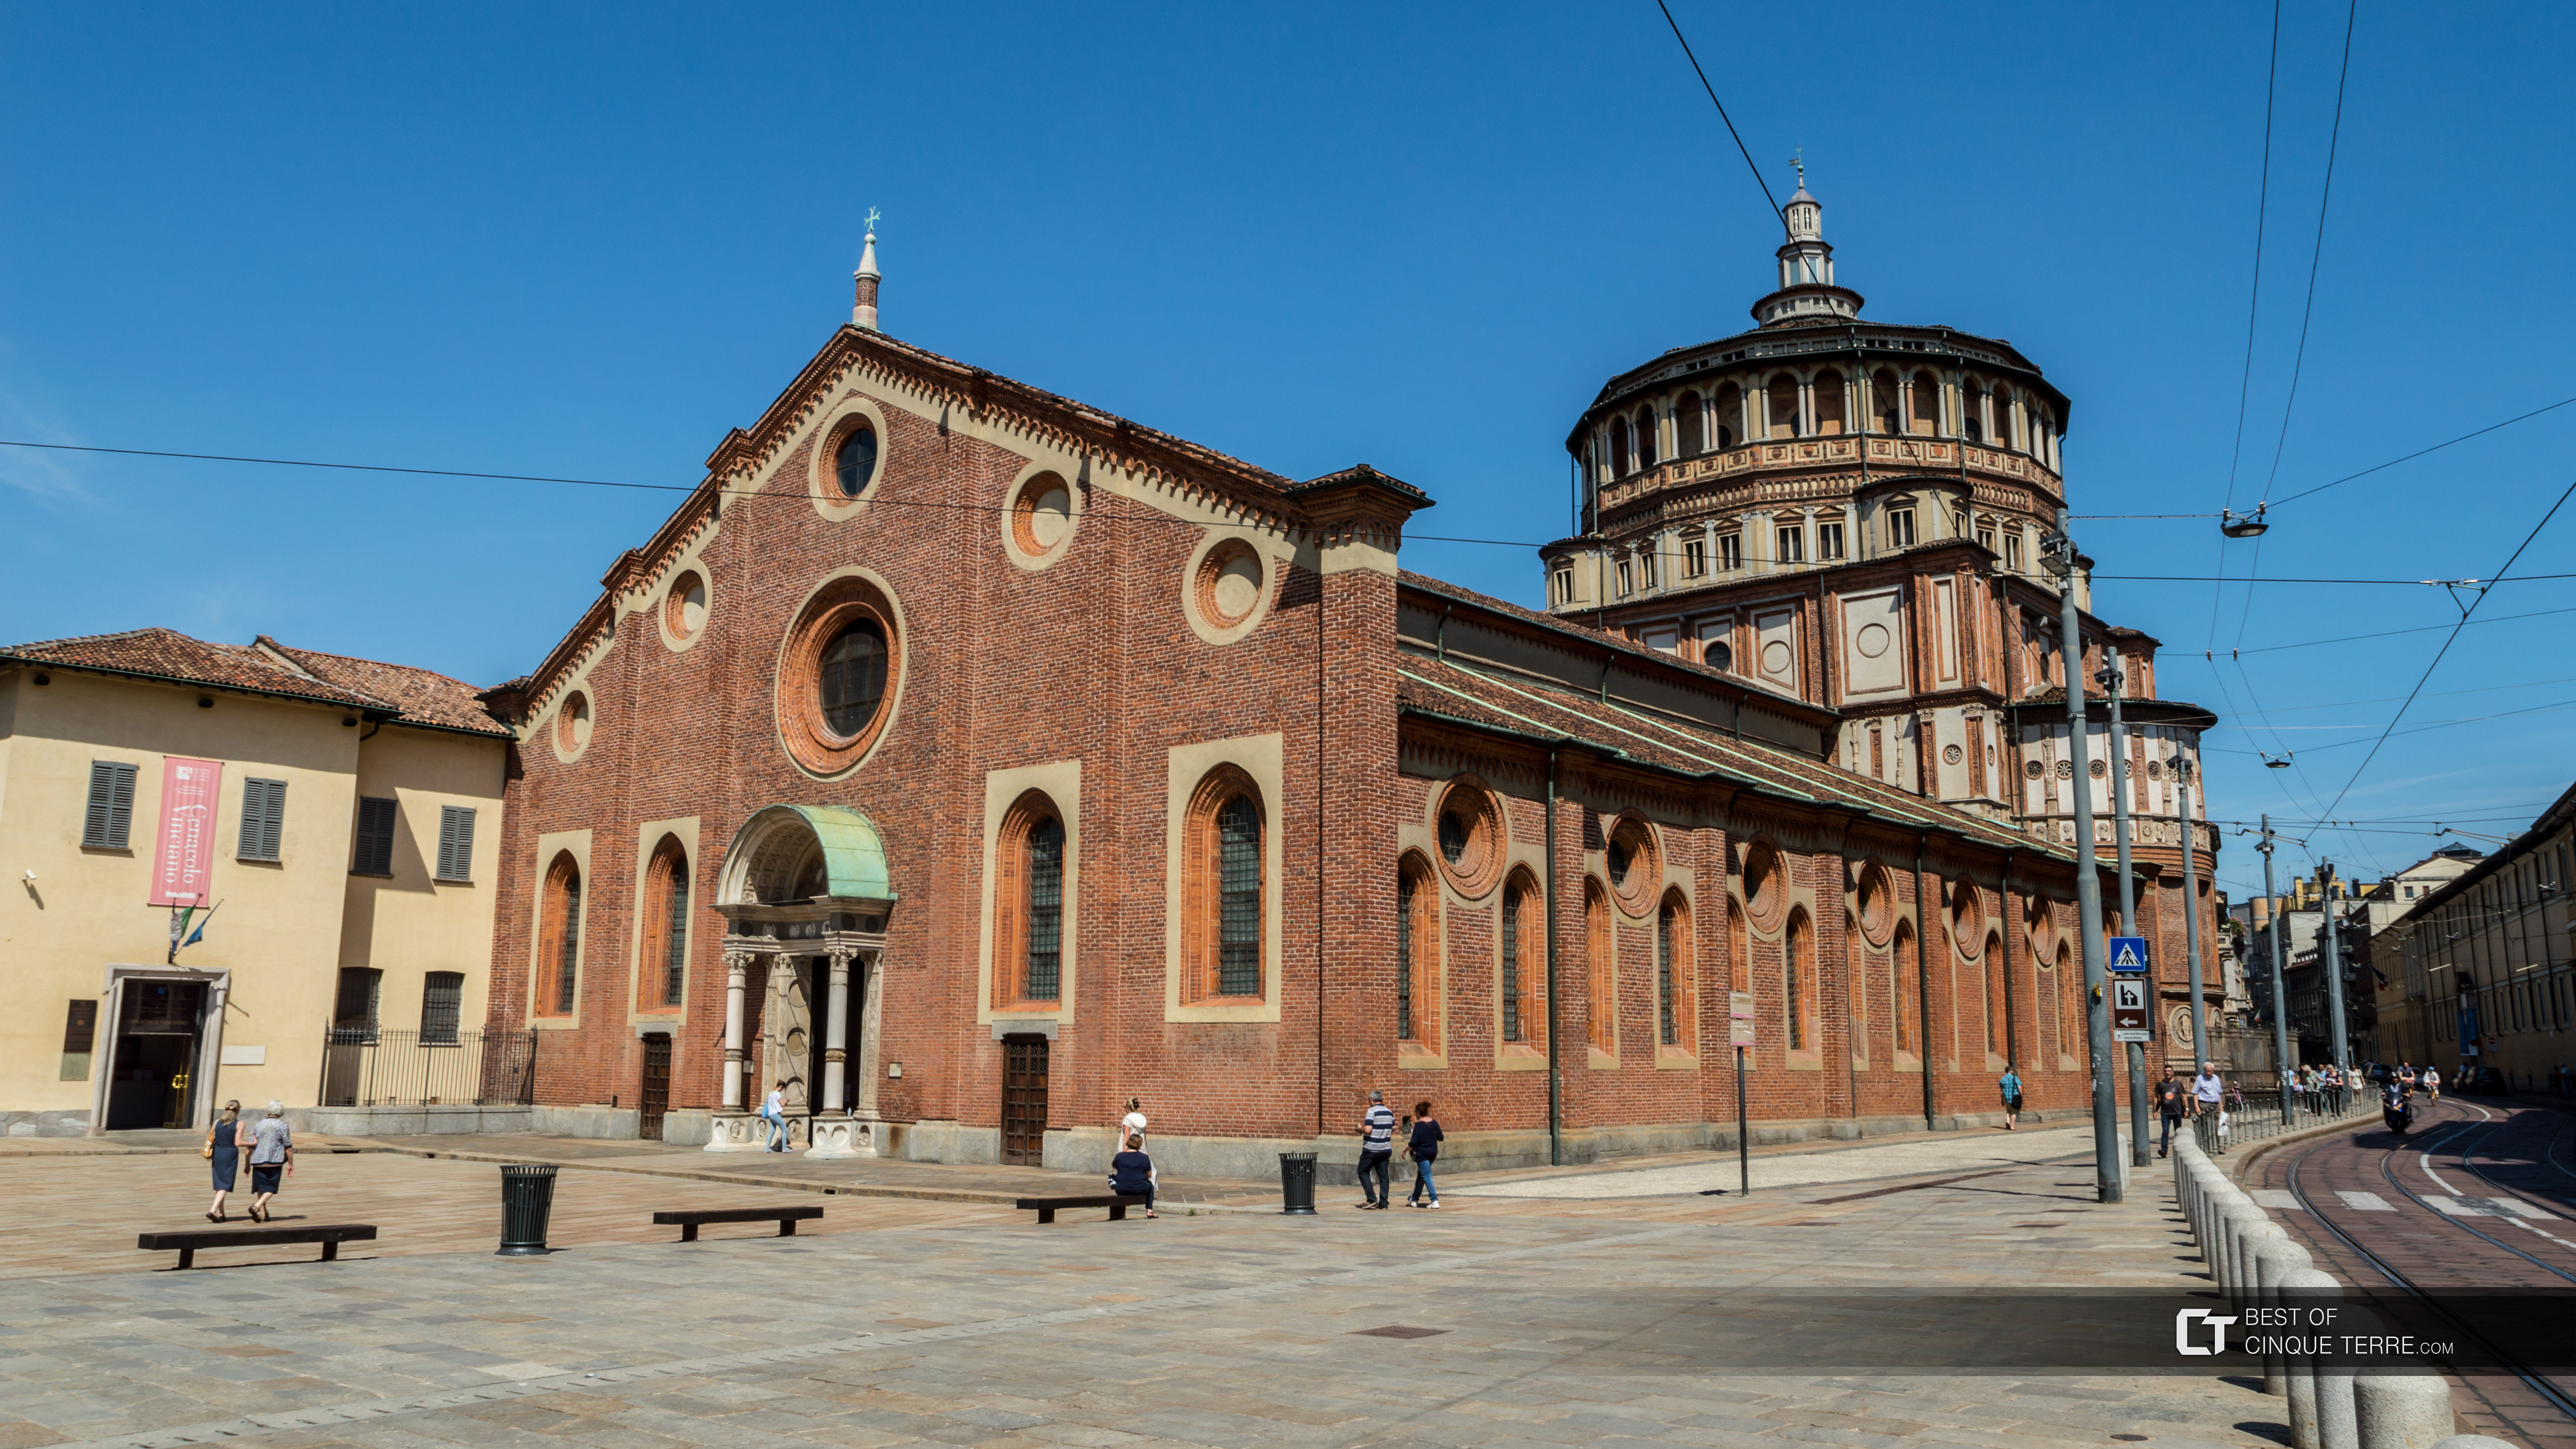 Kościół Santa Maria delle Grazie, Mediolan, Włochy